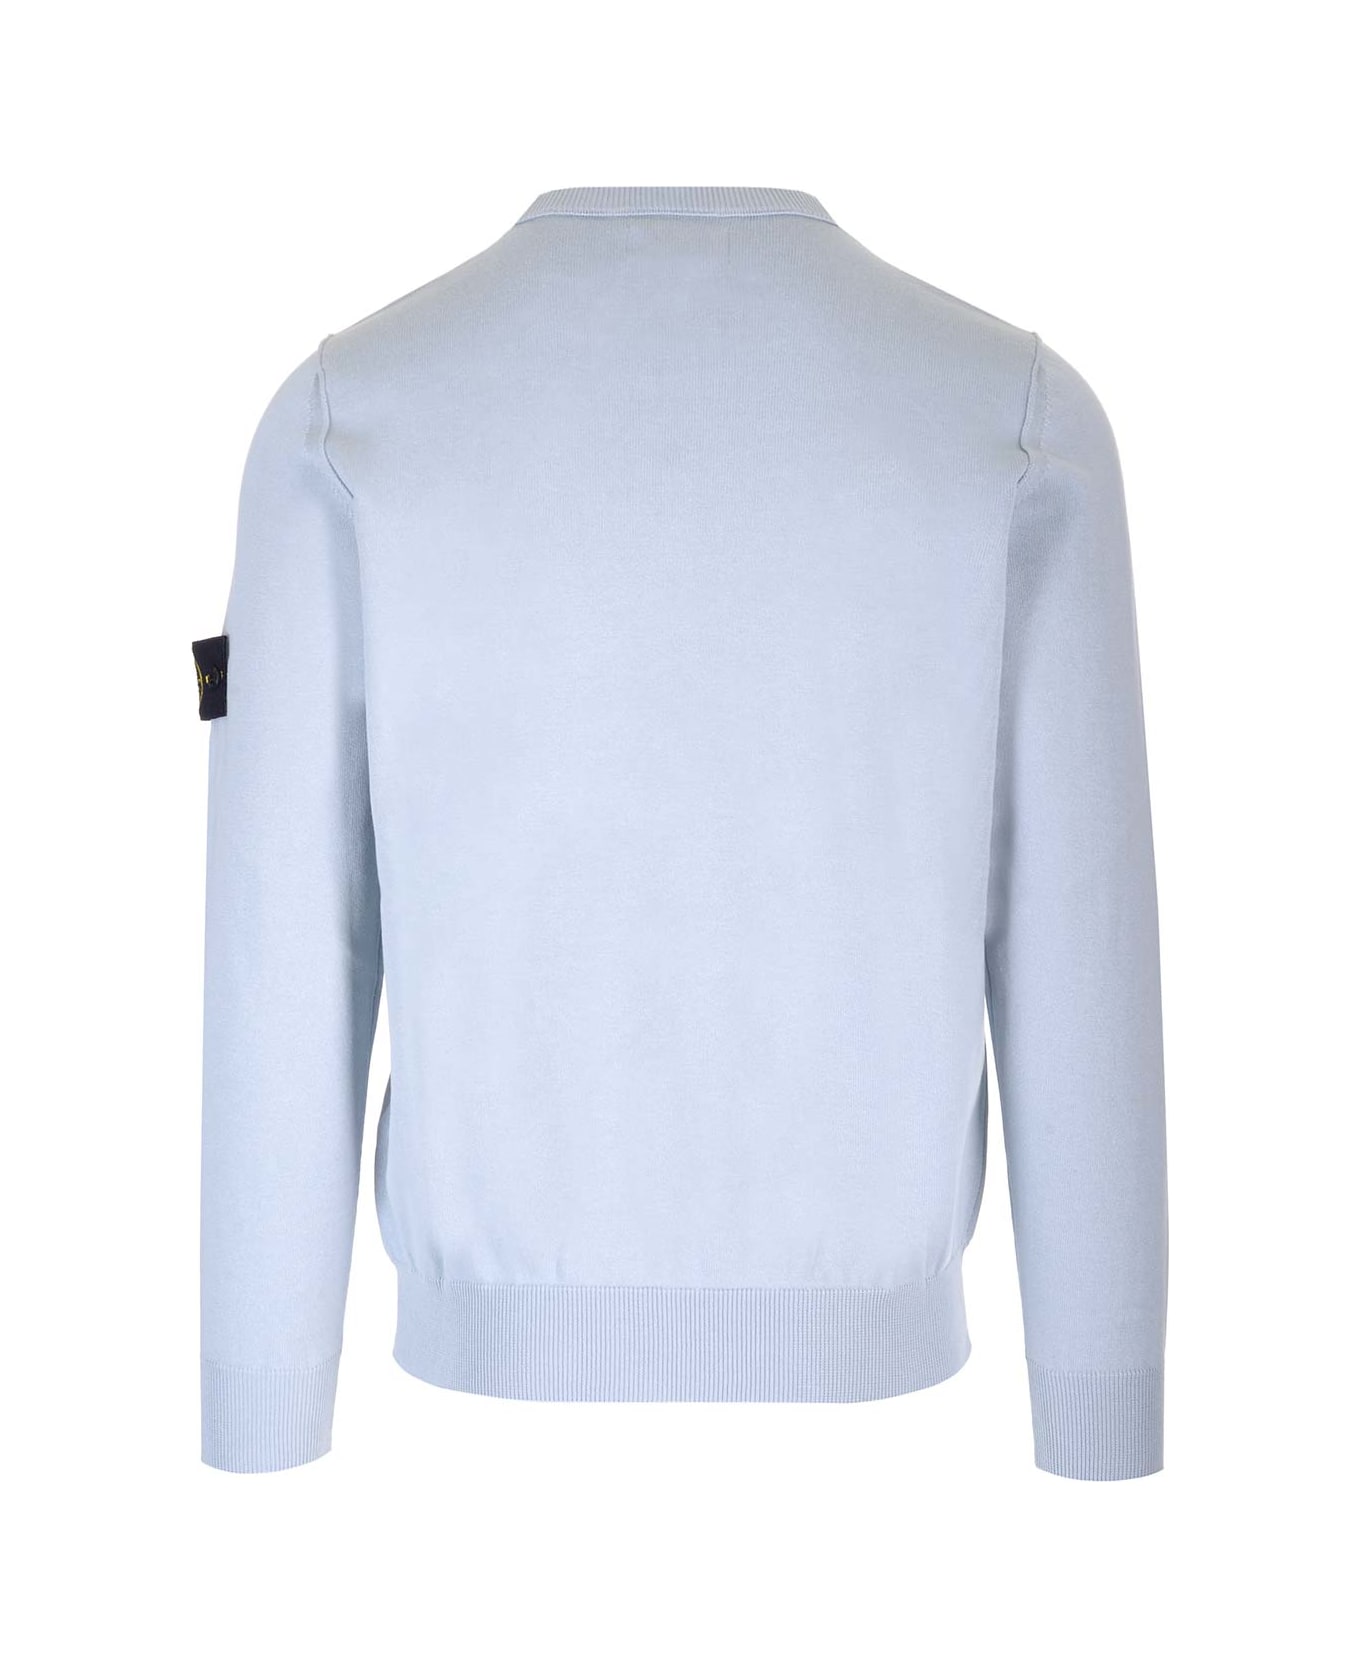 Stone Island Classic Crew-neck Sweater - Light blue